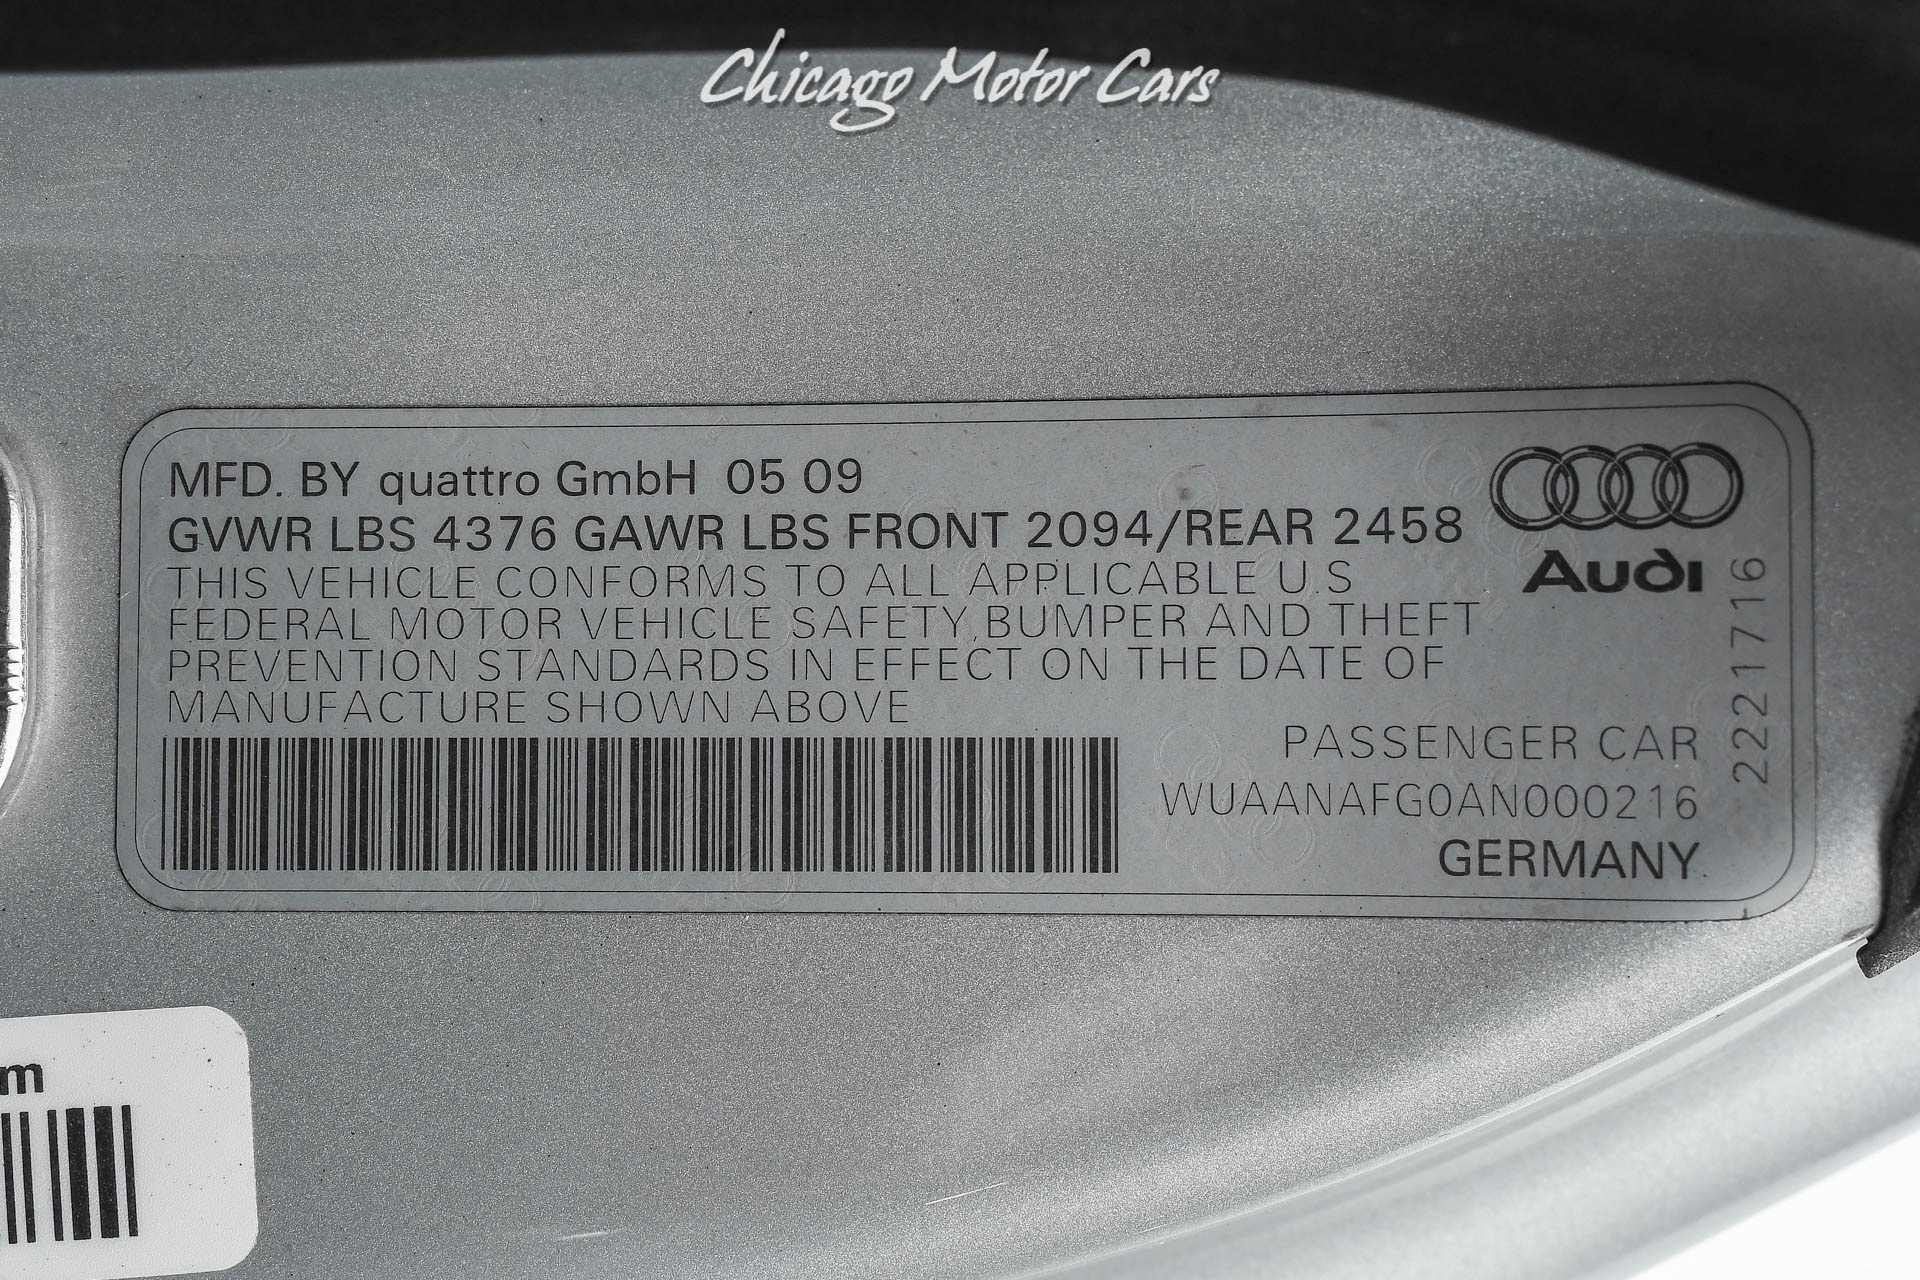 Used-2010-Audi-R8-52-V10-quattro-168kMSRP-Carbon-Fiber-R-Tronic